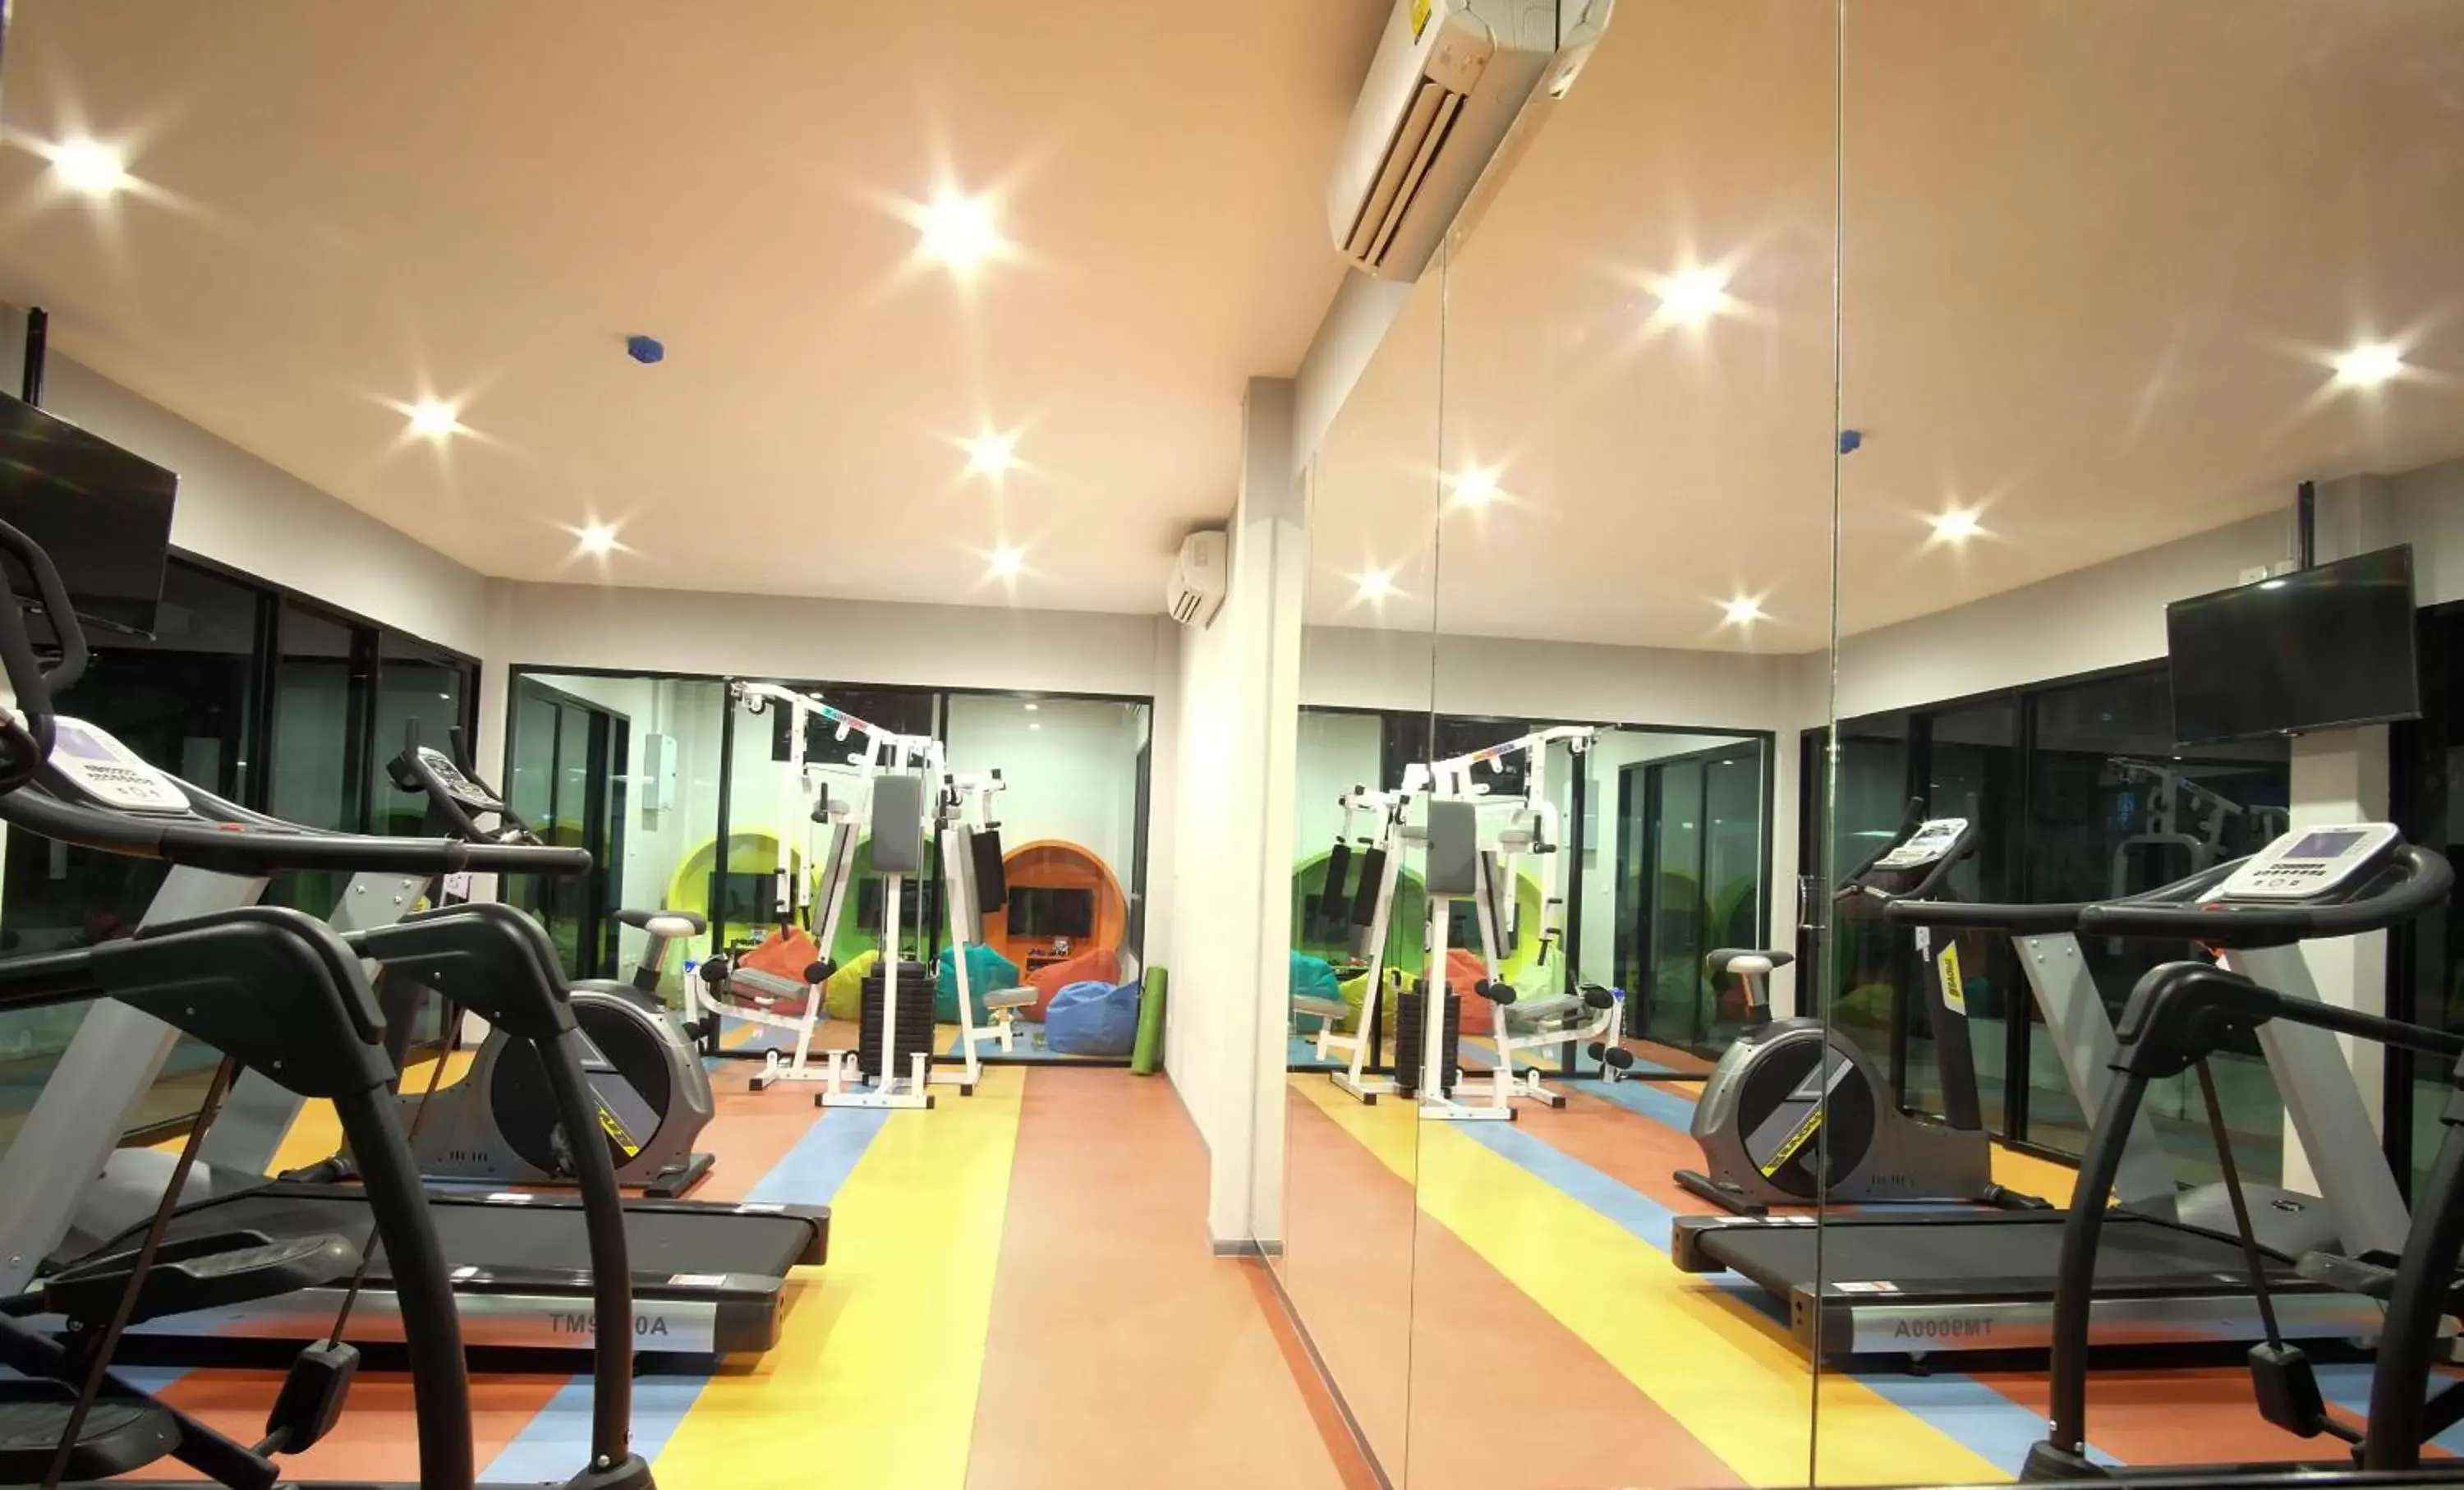 Fitness centre/facilities, Fitness Center/Facilities in FX Hotel Pattaya